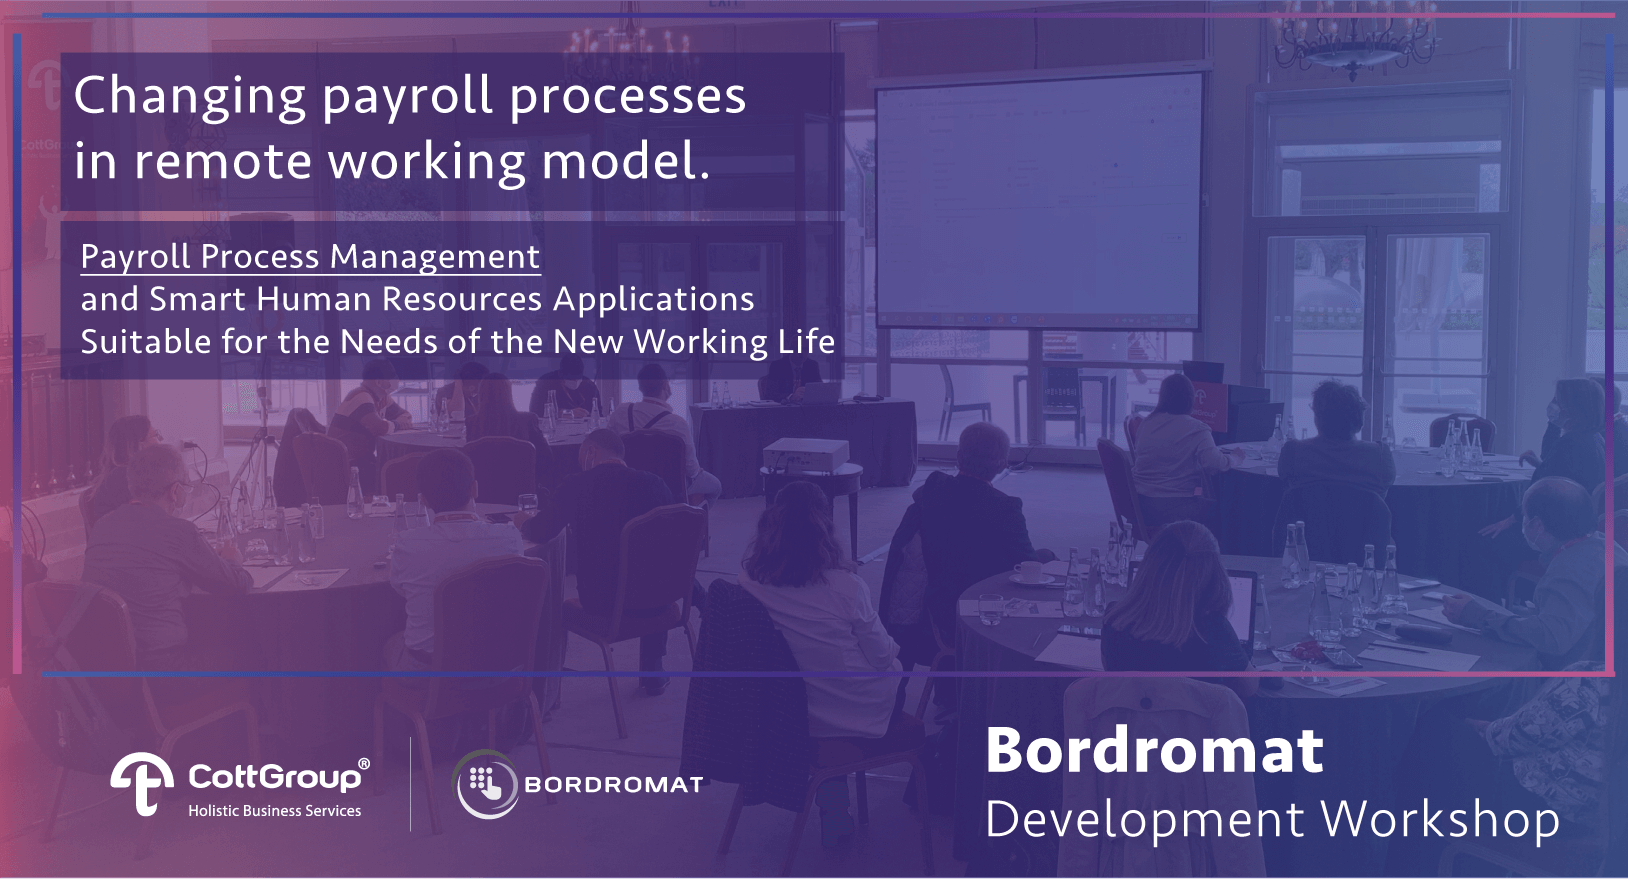 Payroll Process Management System: Bordromat - Development Workshop